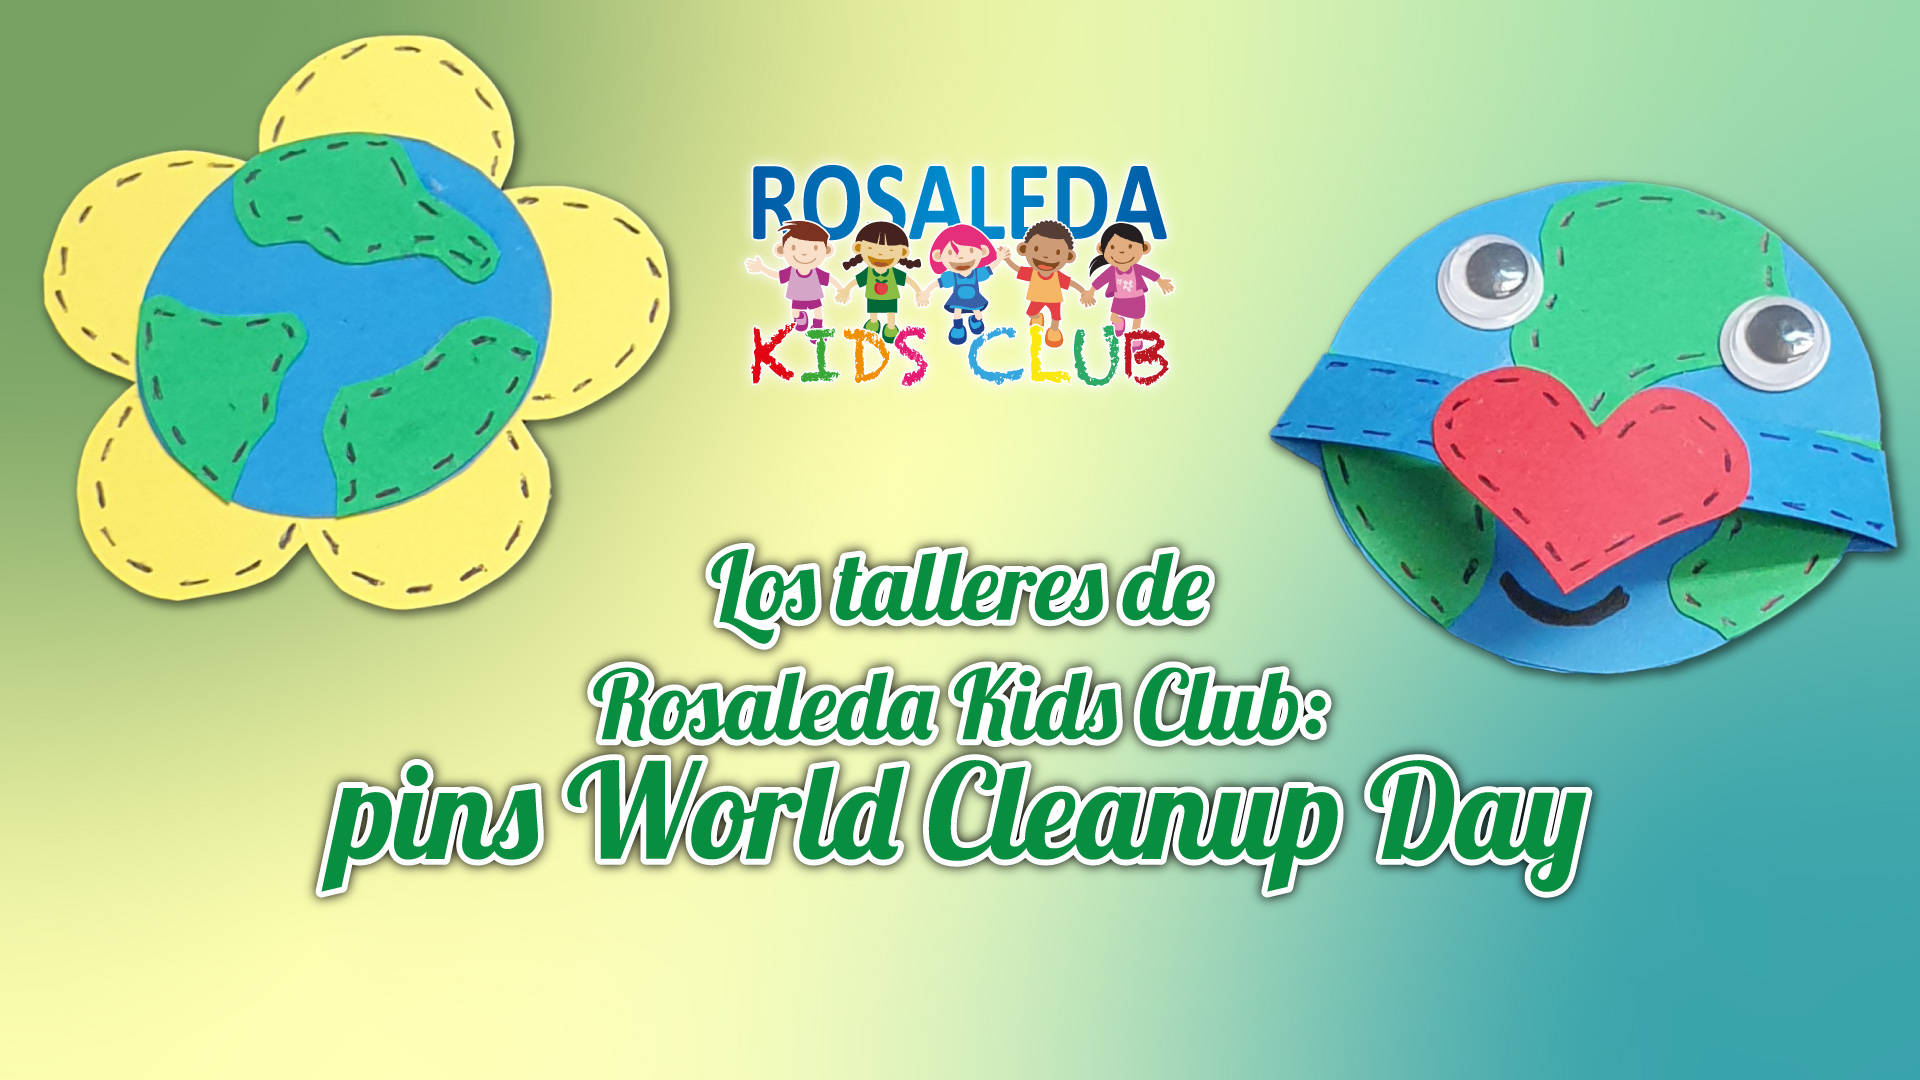 Rosaleda Kids Club: World Cleanup Day